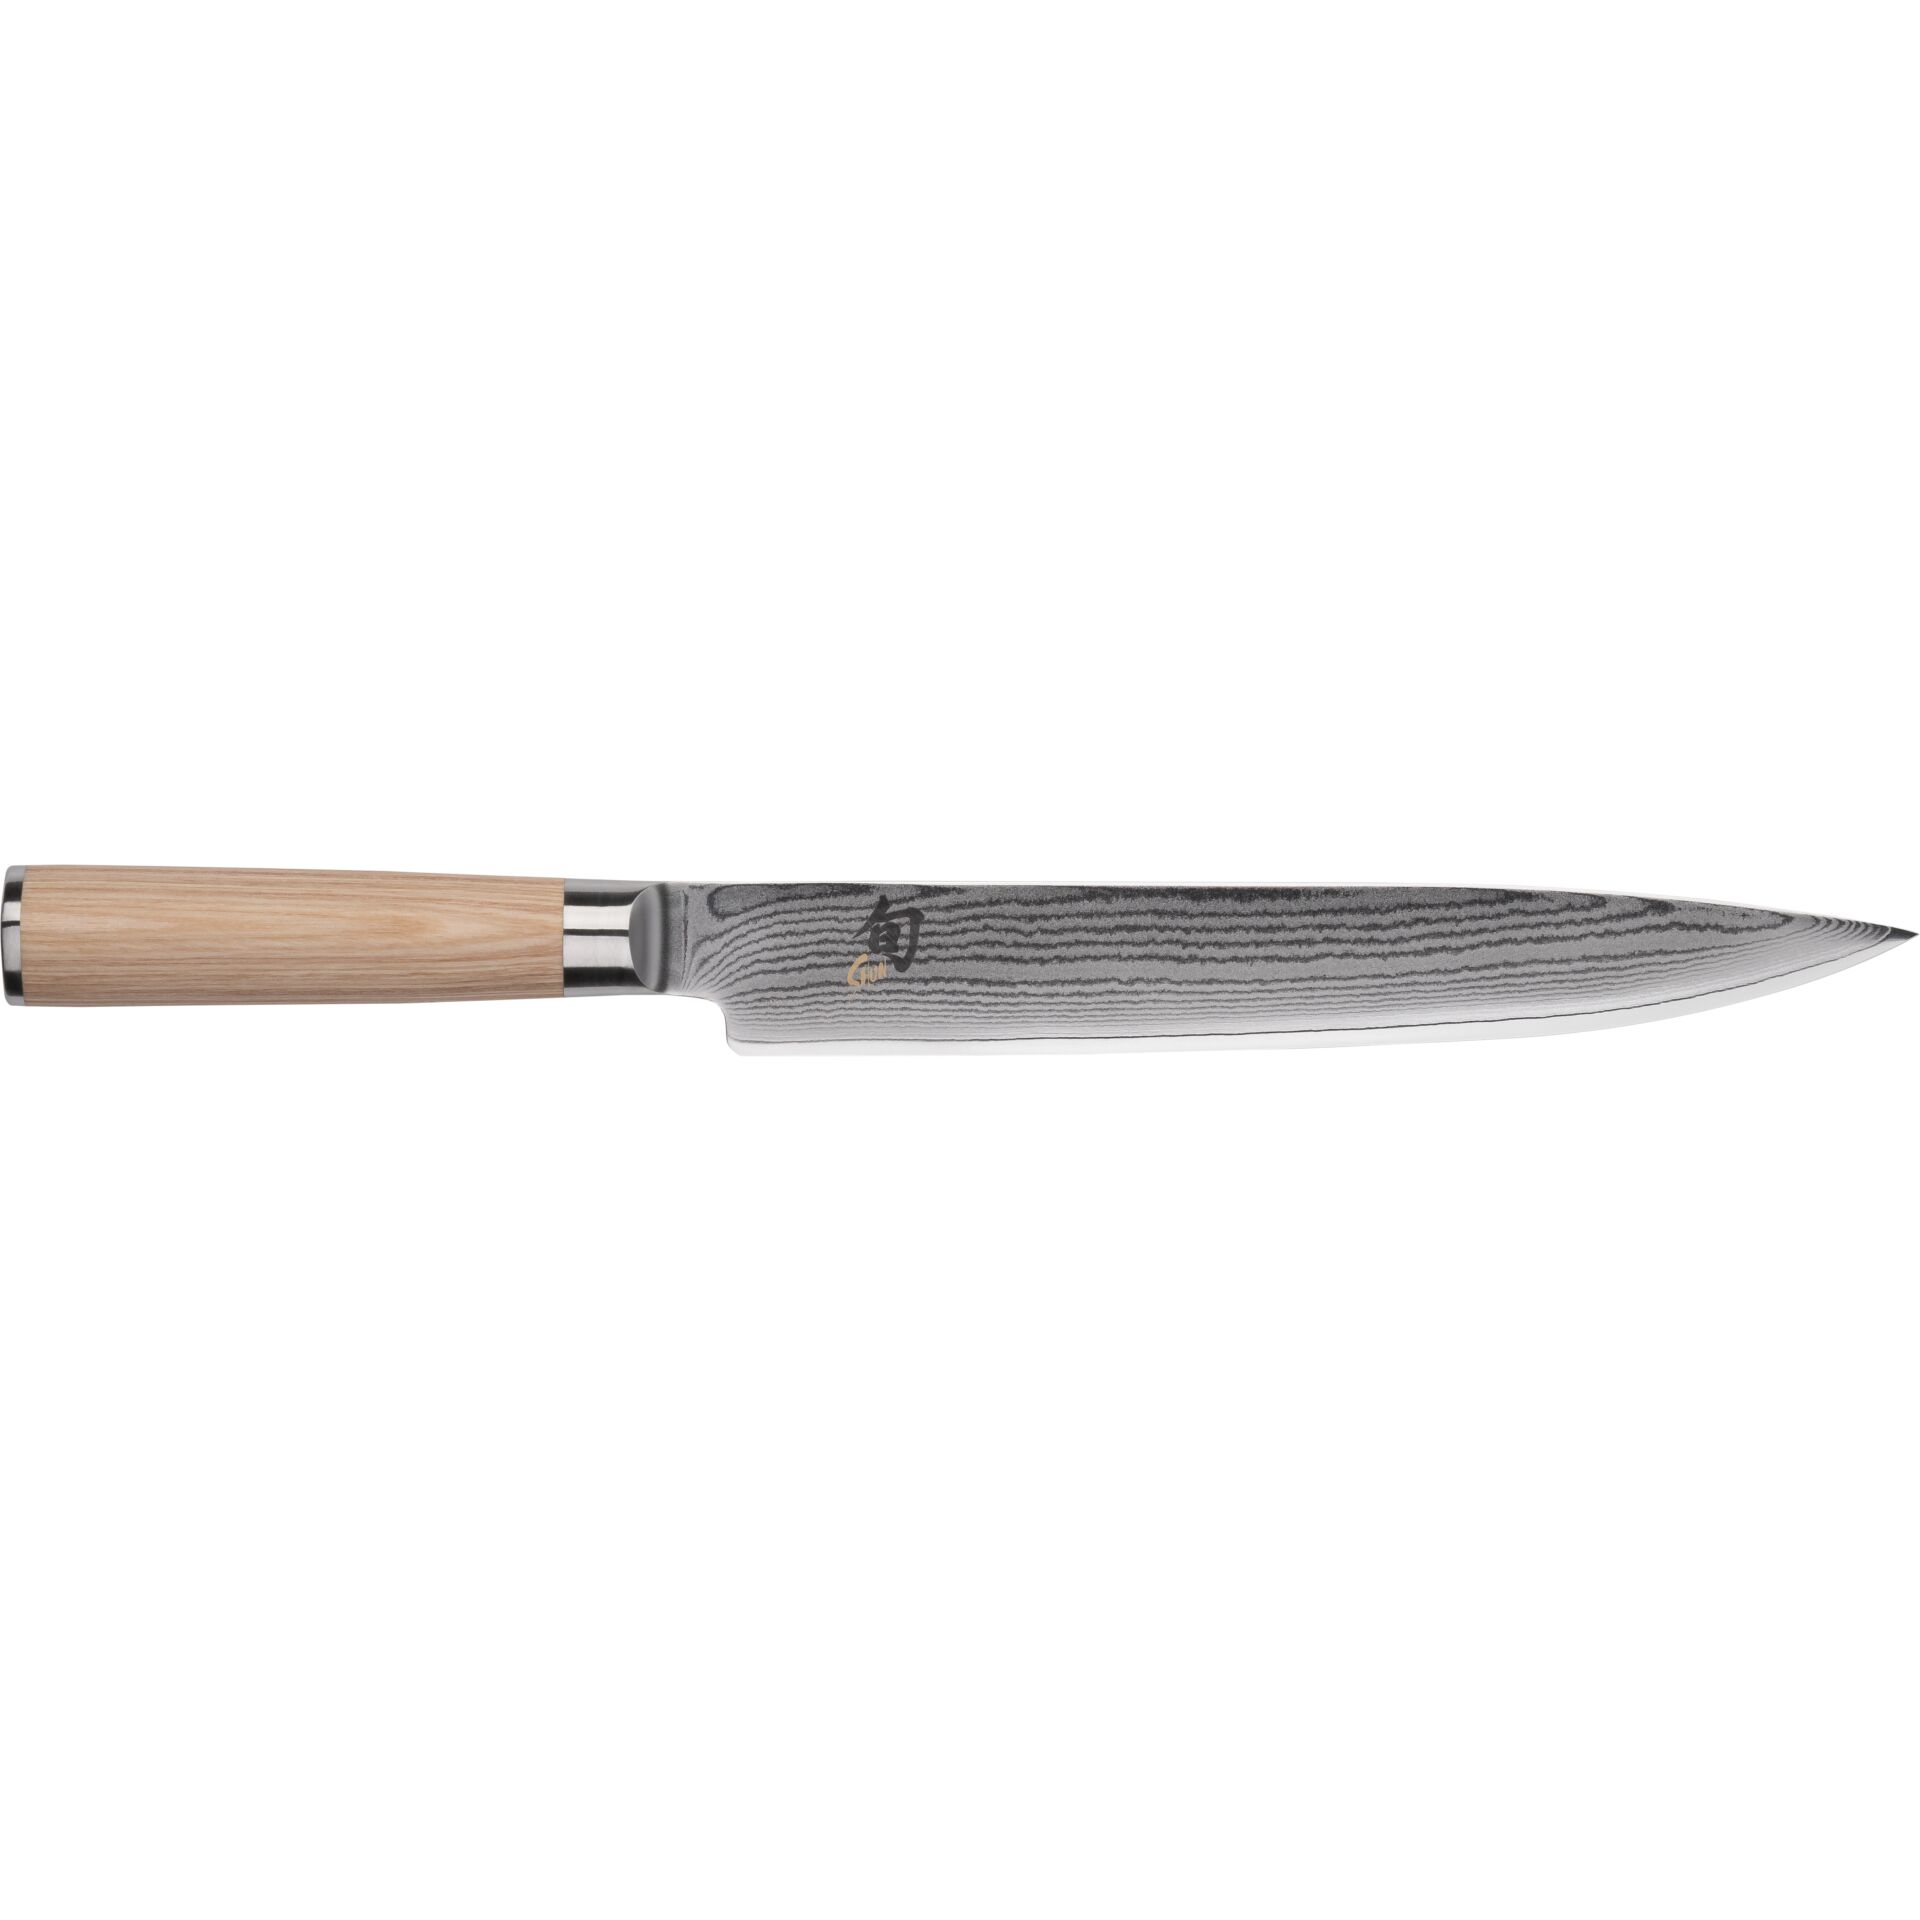 KAI Shun bianco coltello da carne, 23 cm